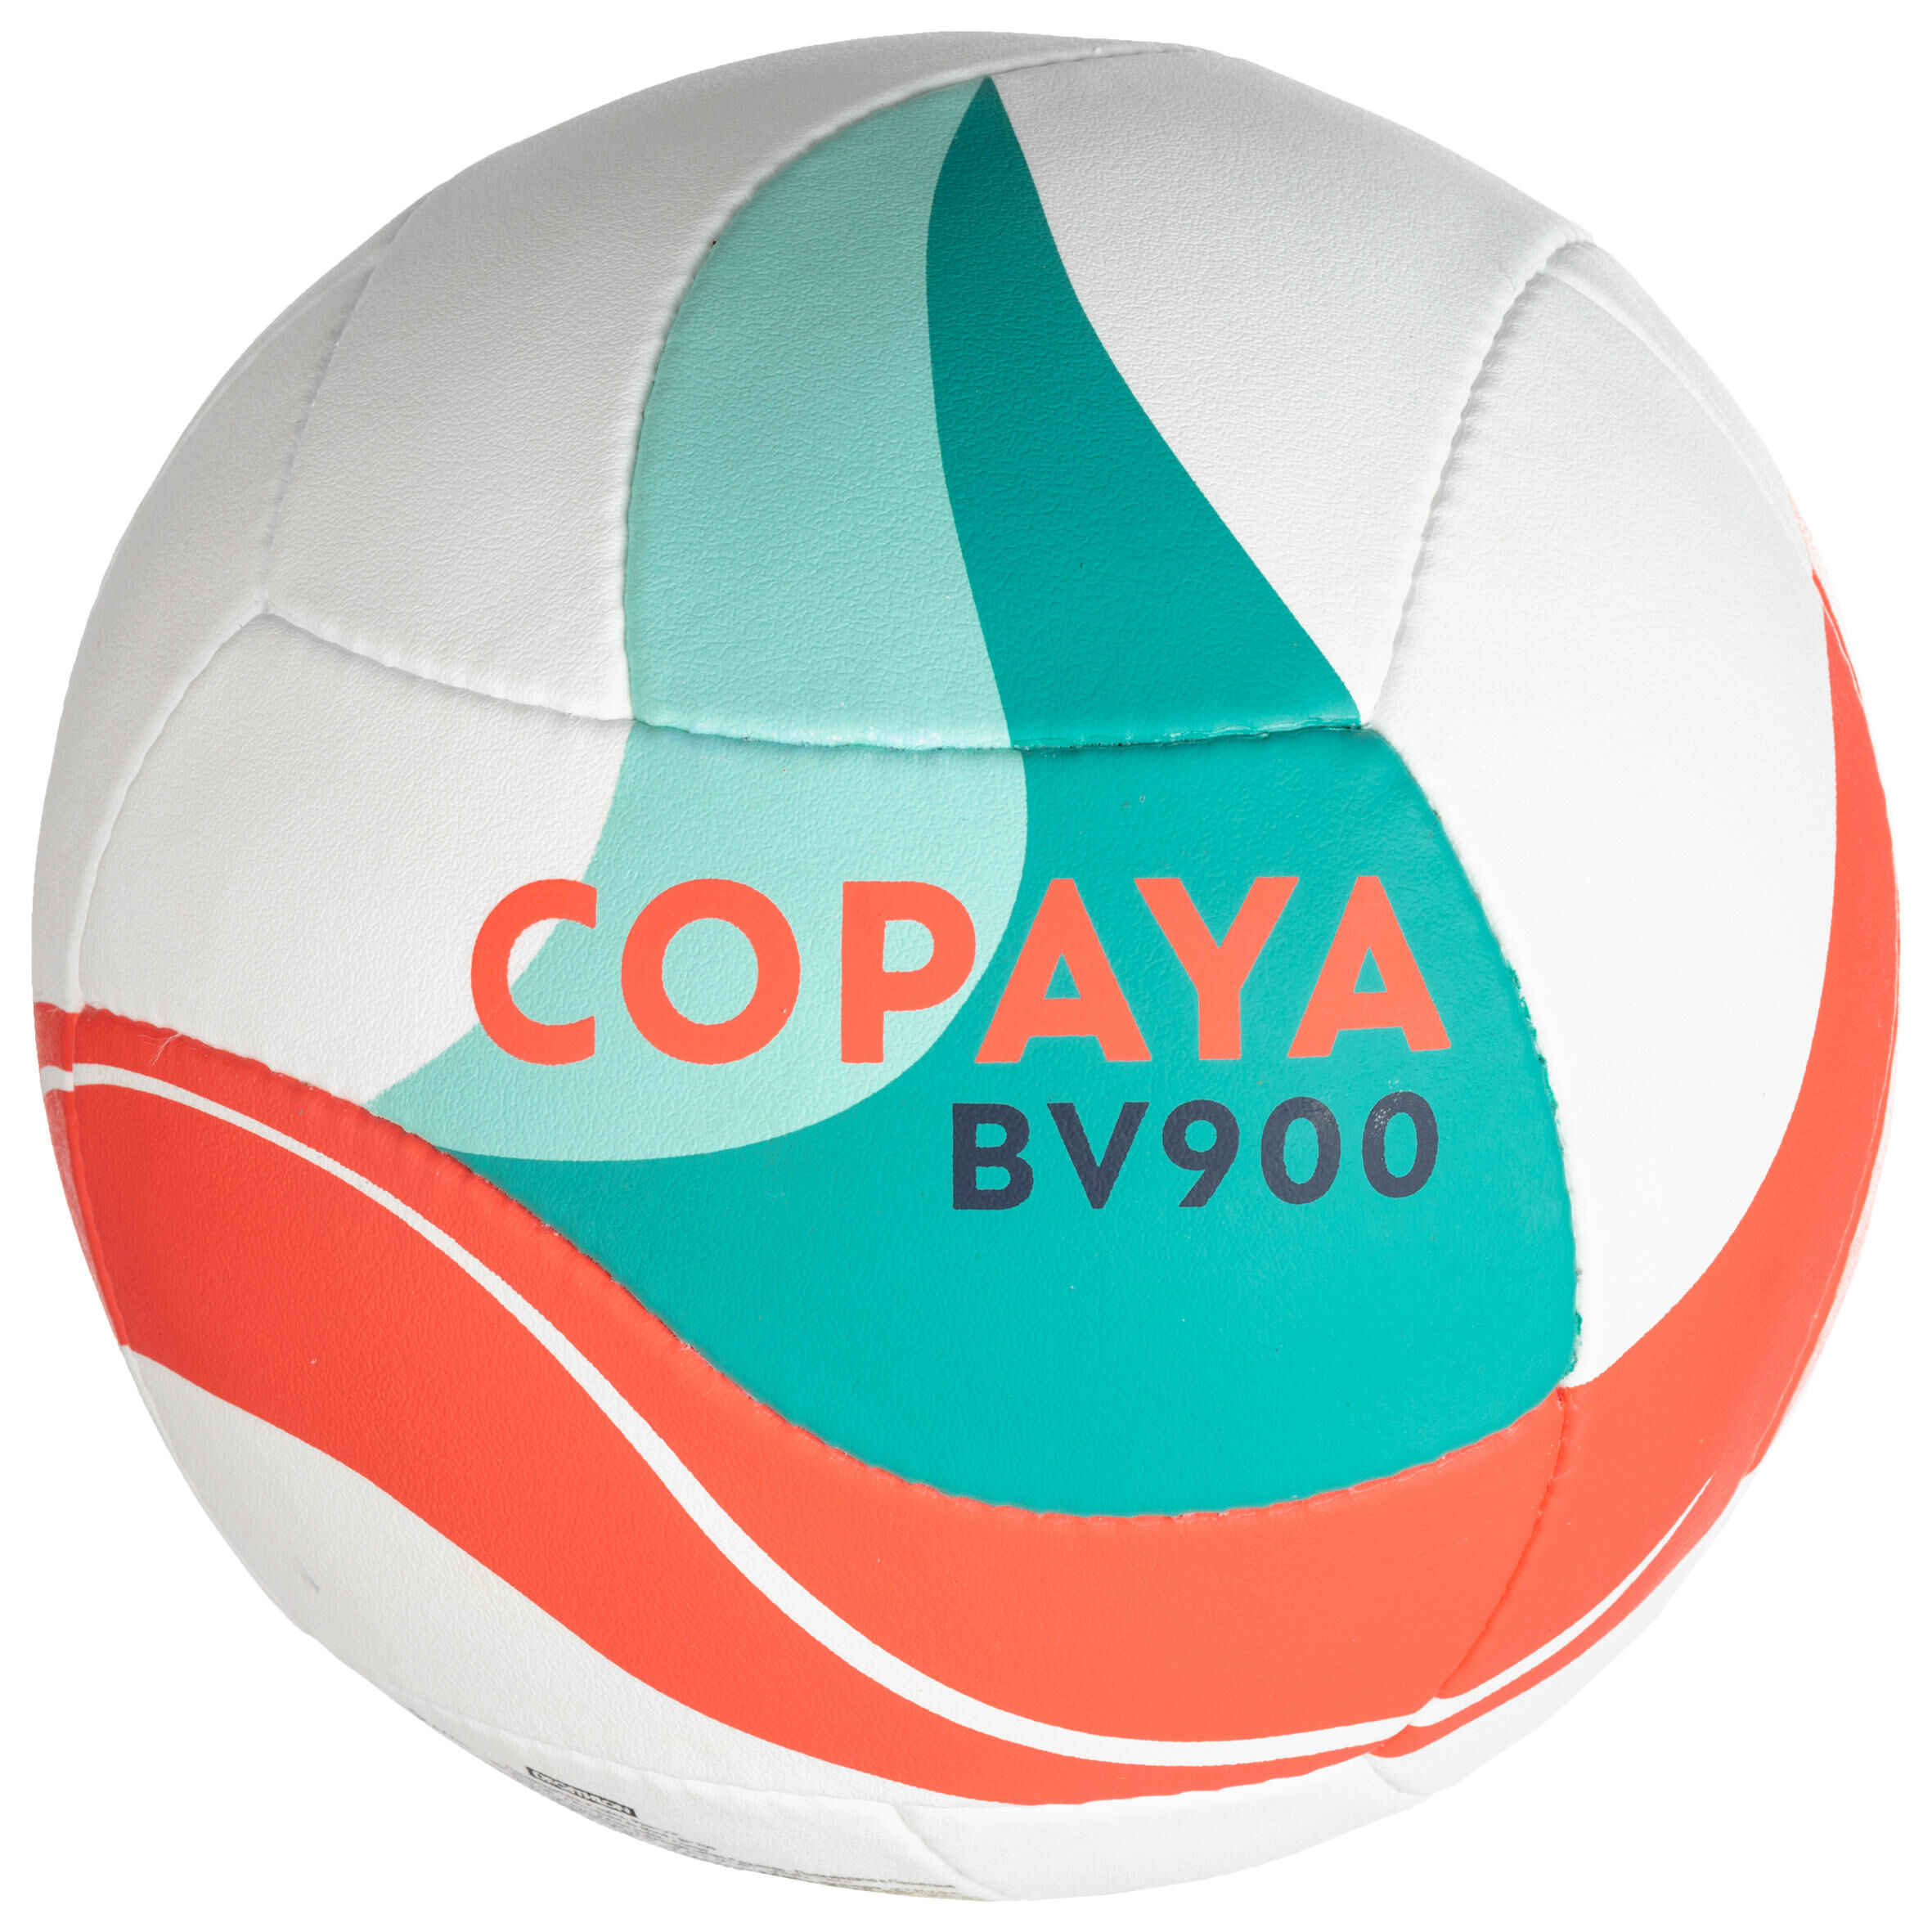 COPAYA BV900 FIVB Beach Volleyball - White/Green/Red